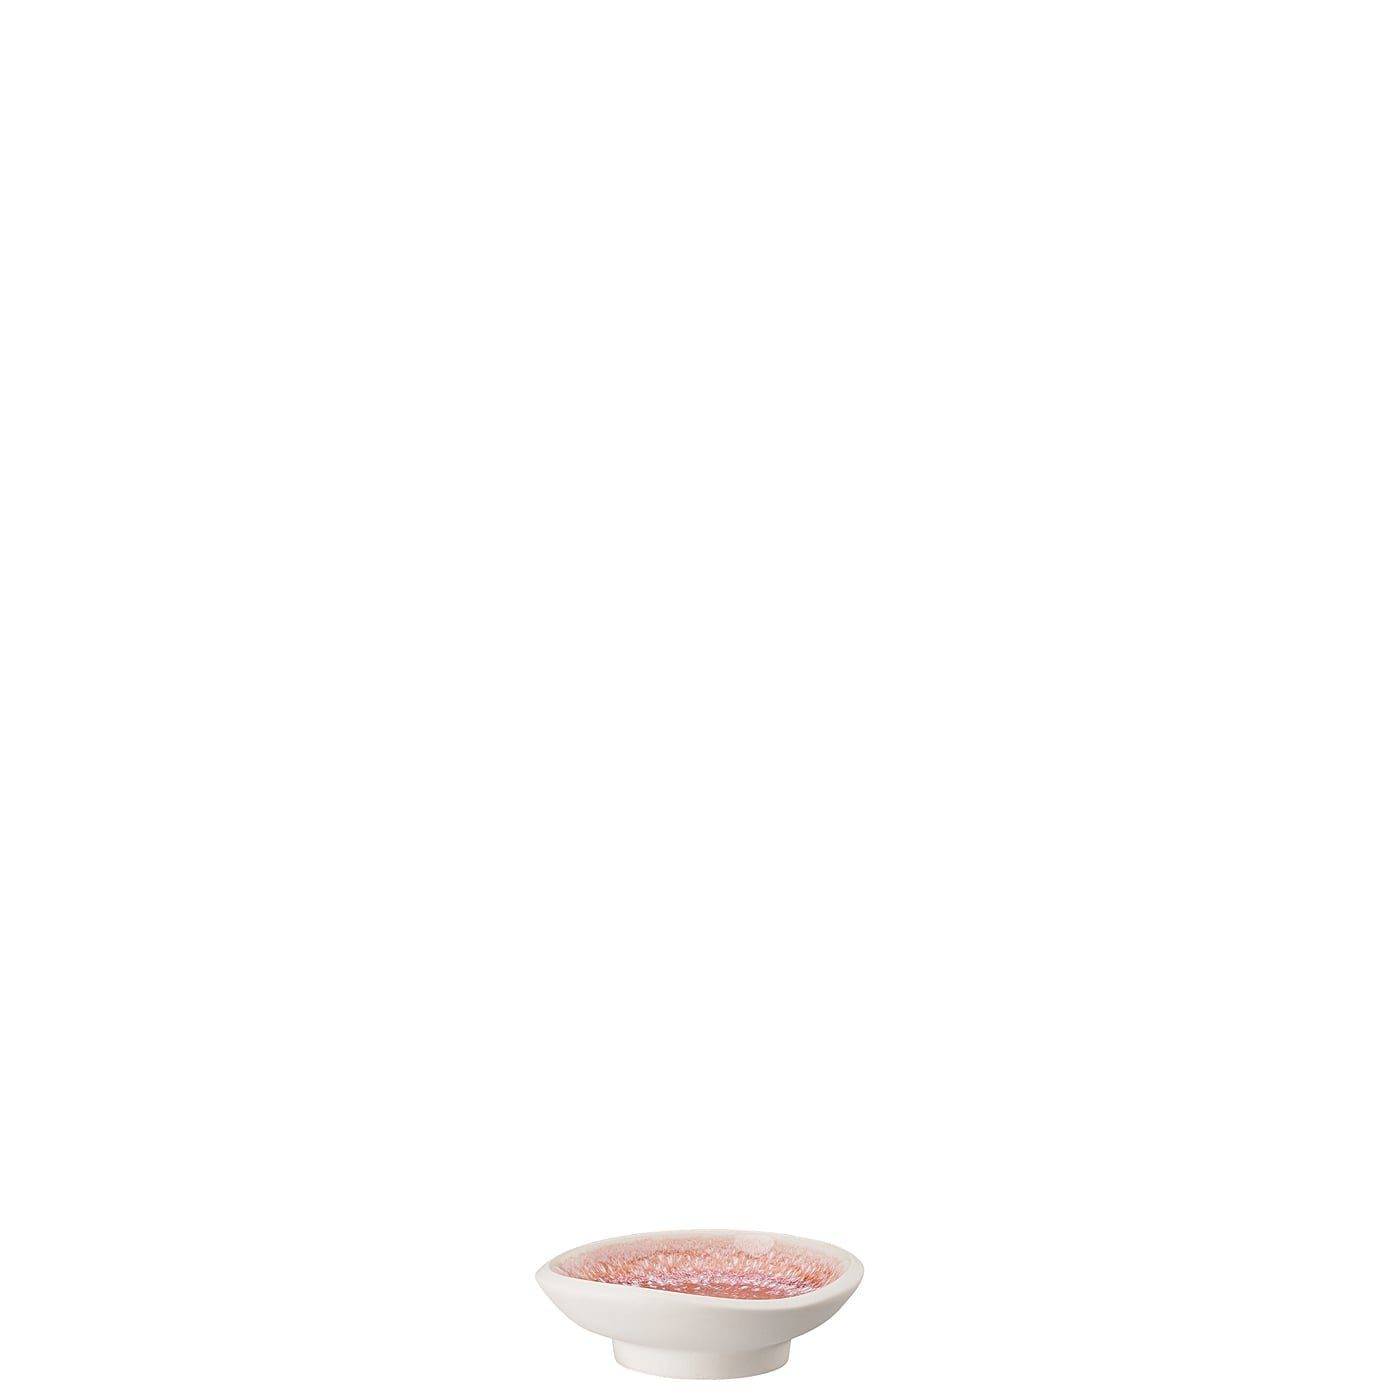 Rosenthal Schale Junto Rose Quartz Bowl 8 cm, Steinzeug, mikrowellengeeignet